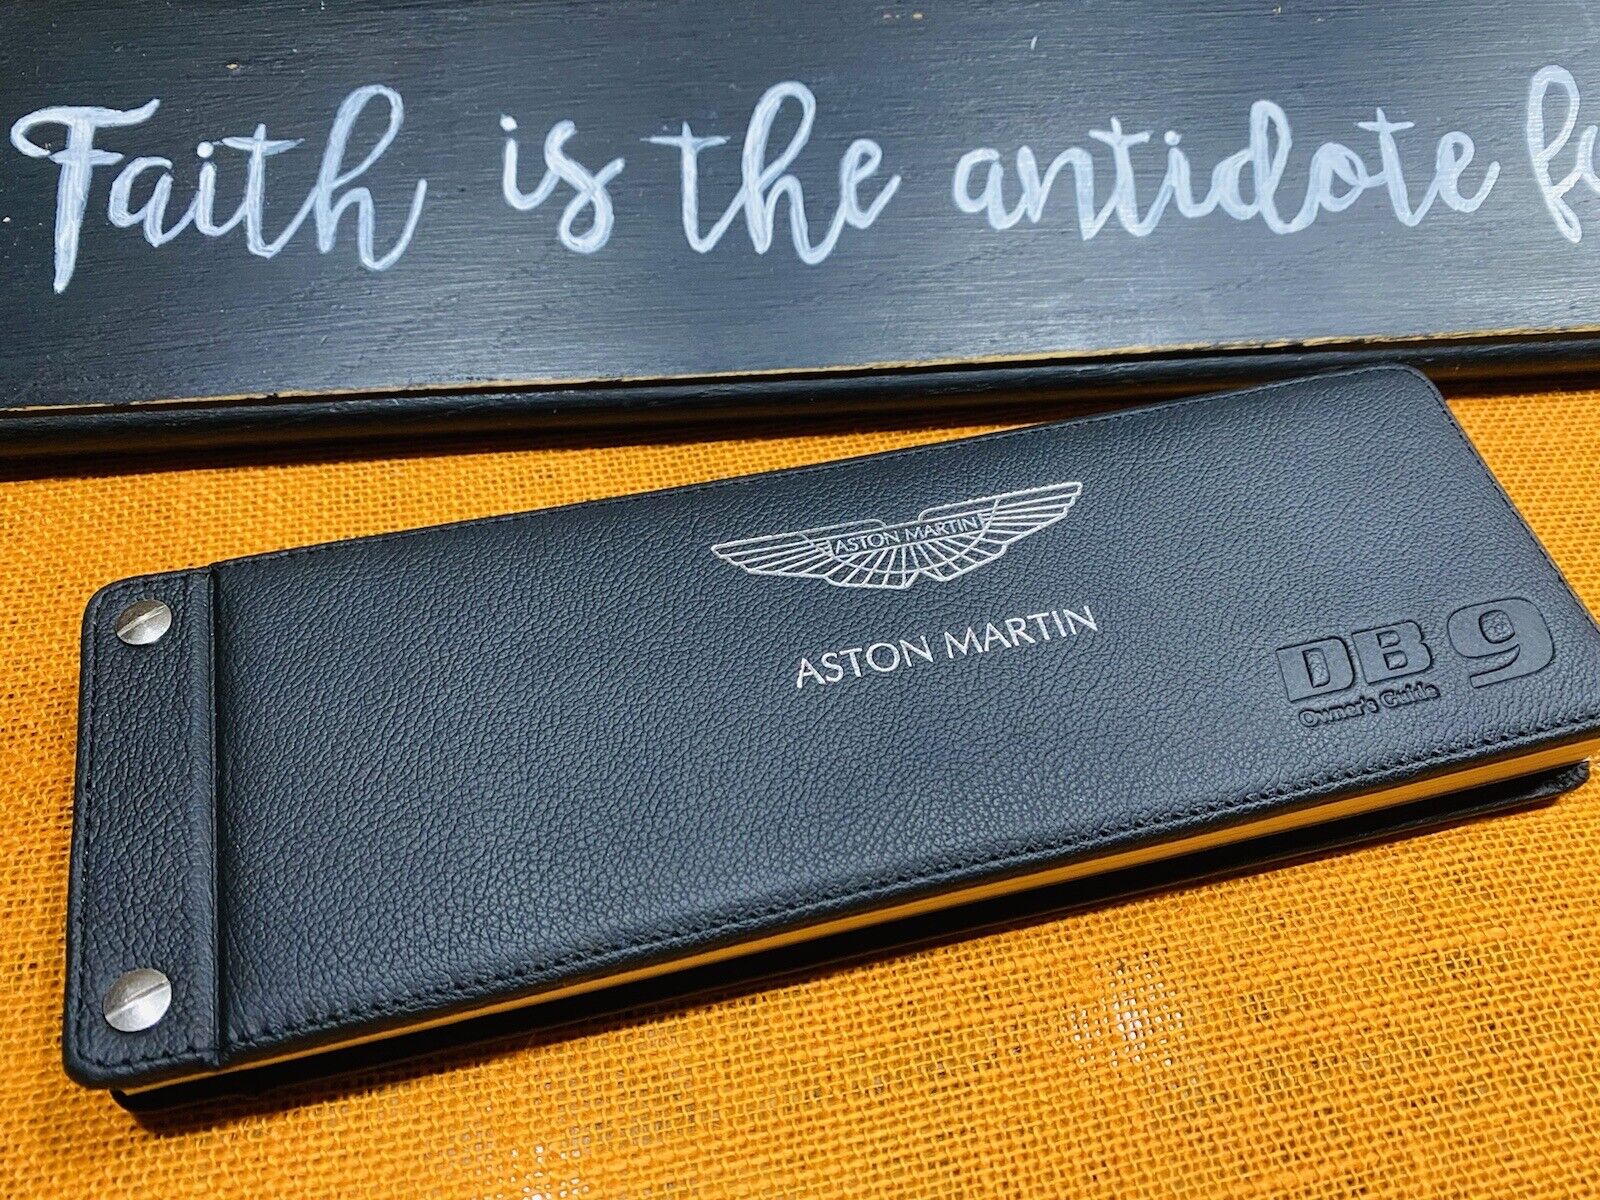 2013 2014 ASTON MARTIN DB9 OWNERS MANUAL +NAVI INFO COUPE VOLANTE CONVERTIBLE 💥